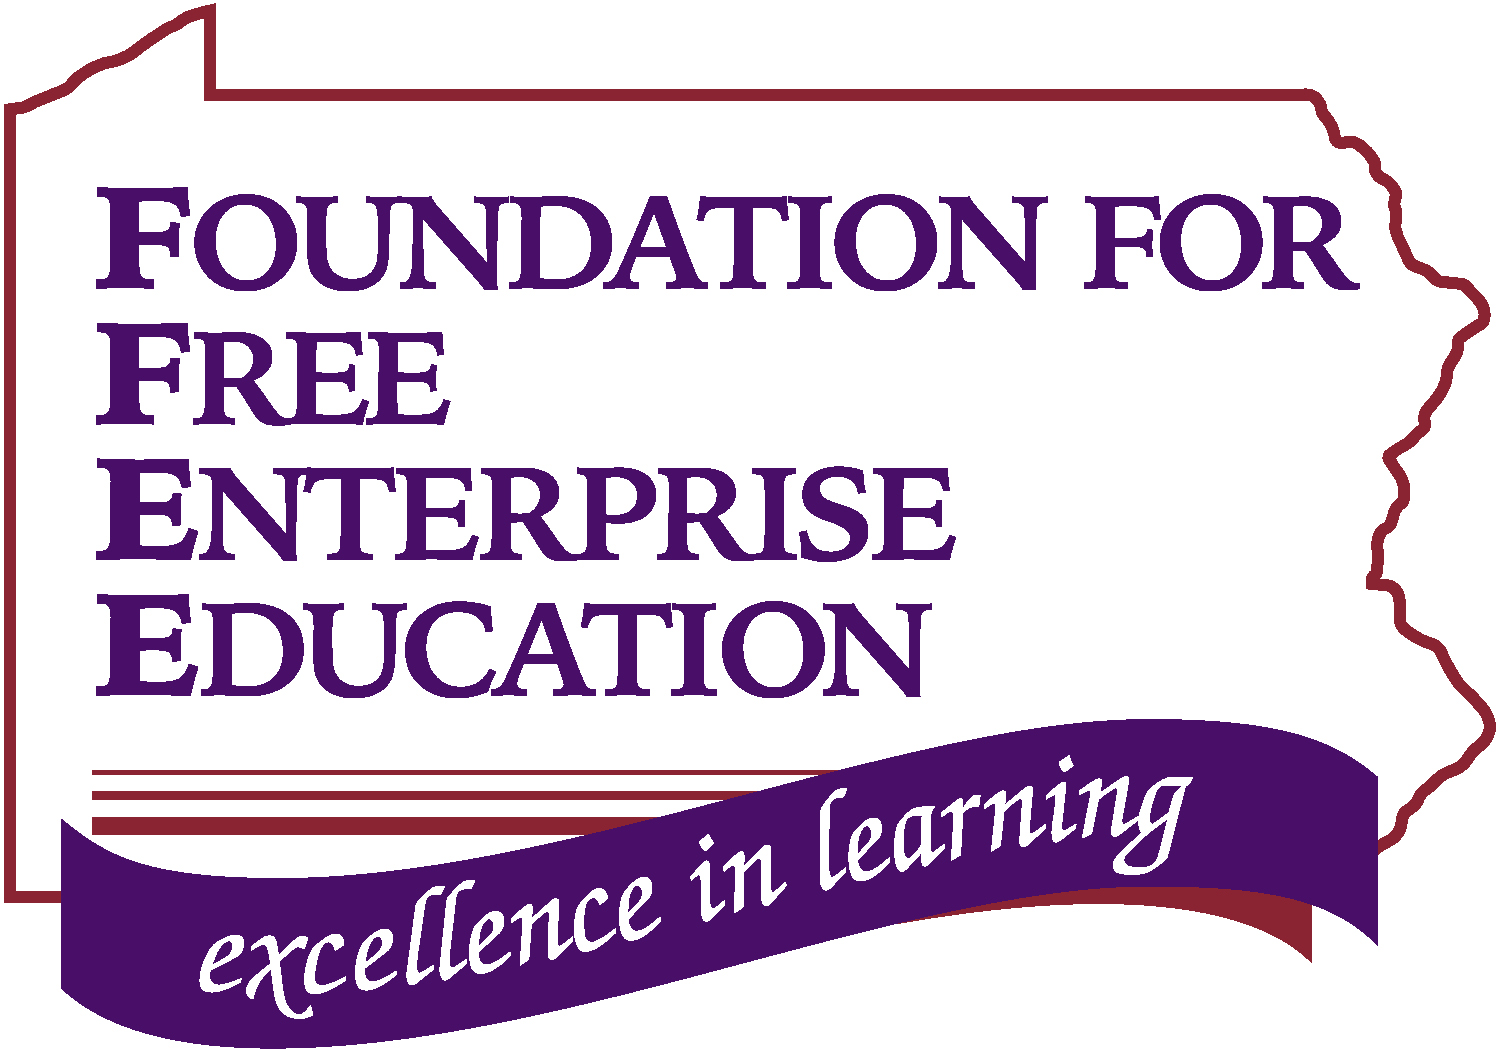 Student Application - Foundation for Free Enterprise Education